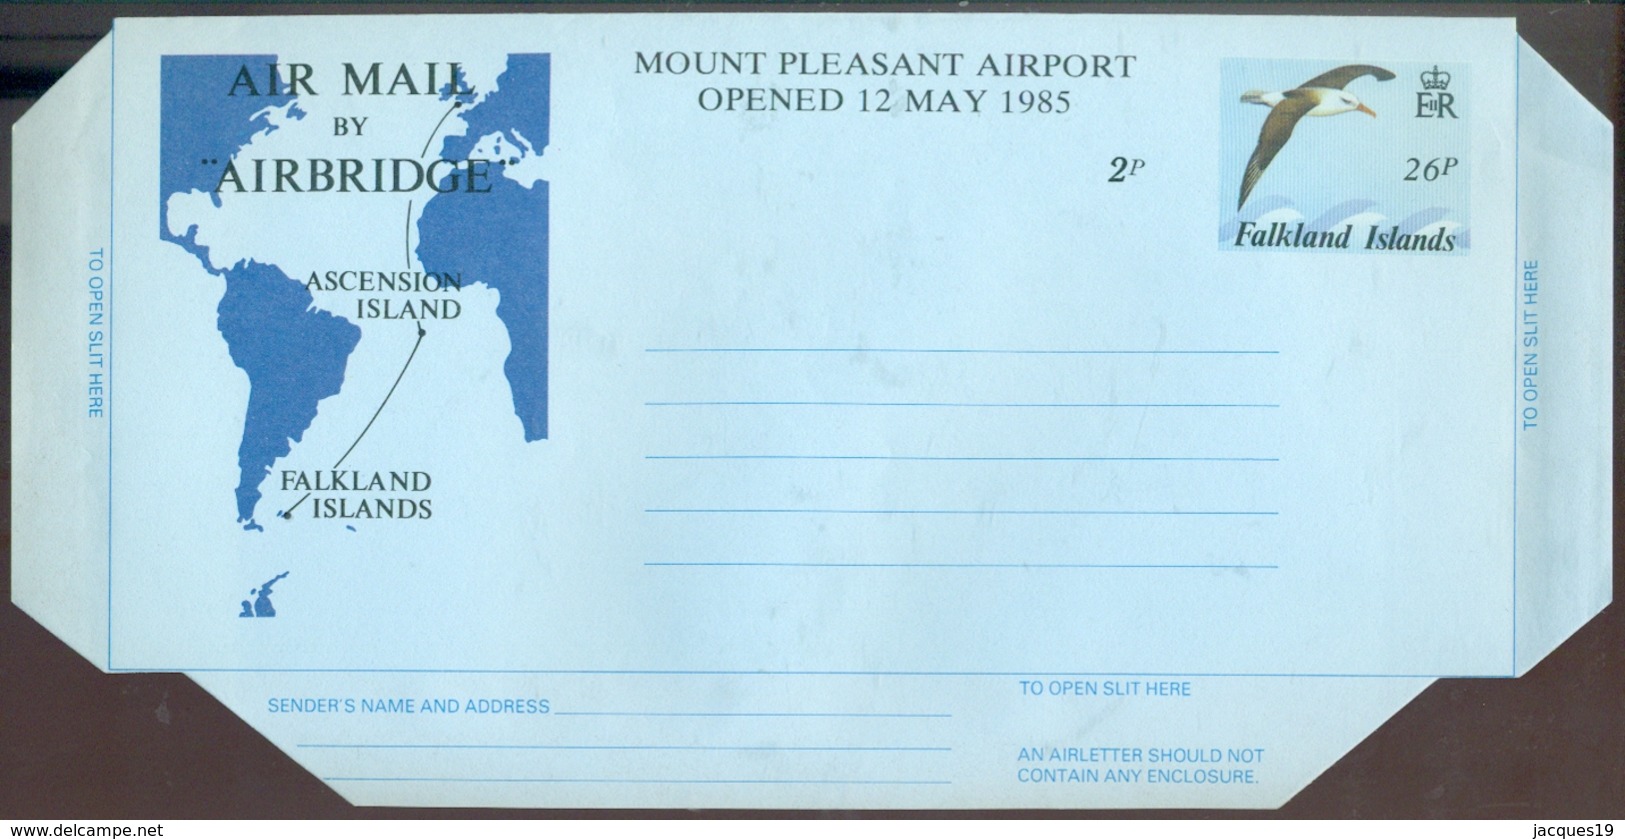 Falkland Islands 1985 Aerogramme 26 P Plus 2 P Mount Pleasant Airport Opened Unused - Falkland